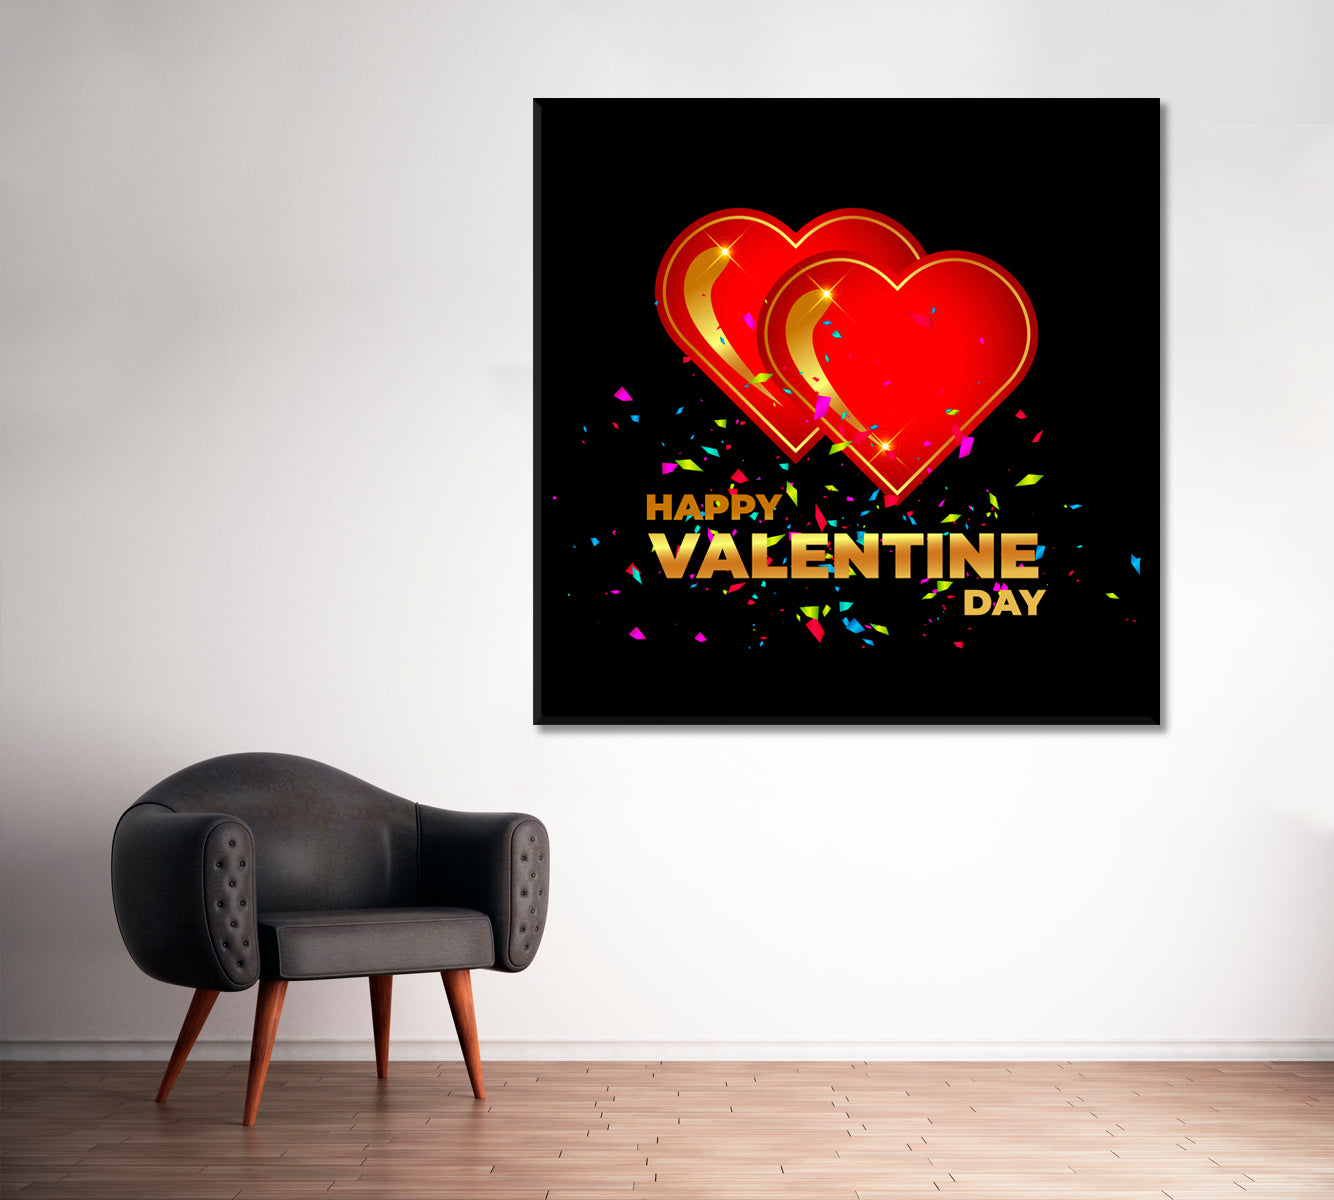 Happy Valentine's Day Canvas Print ArtLexy 1 Panel 12"x12" inches 